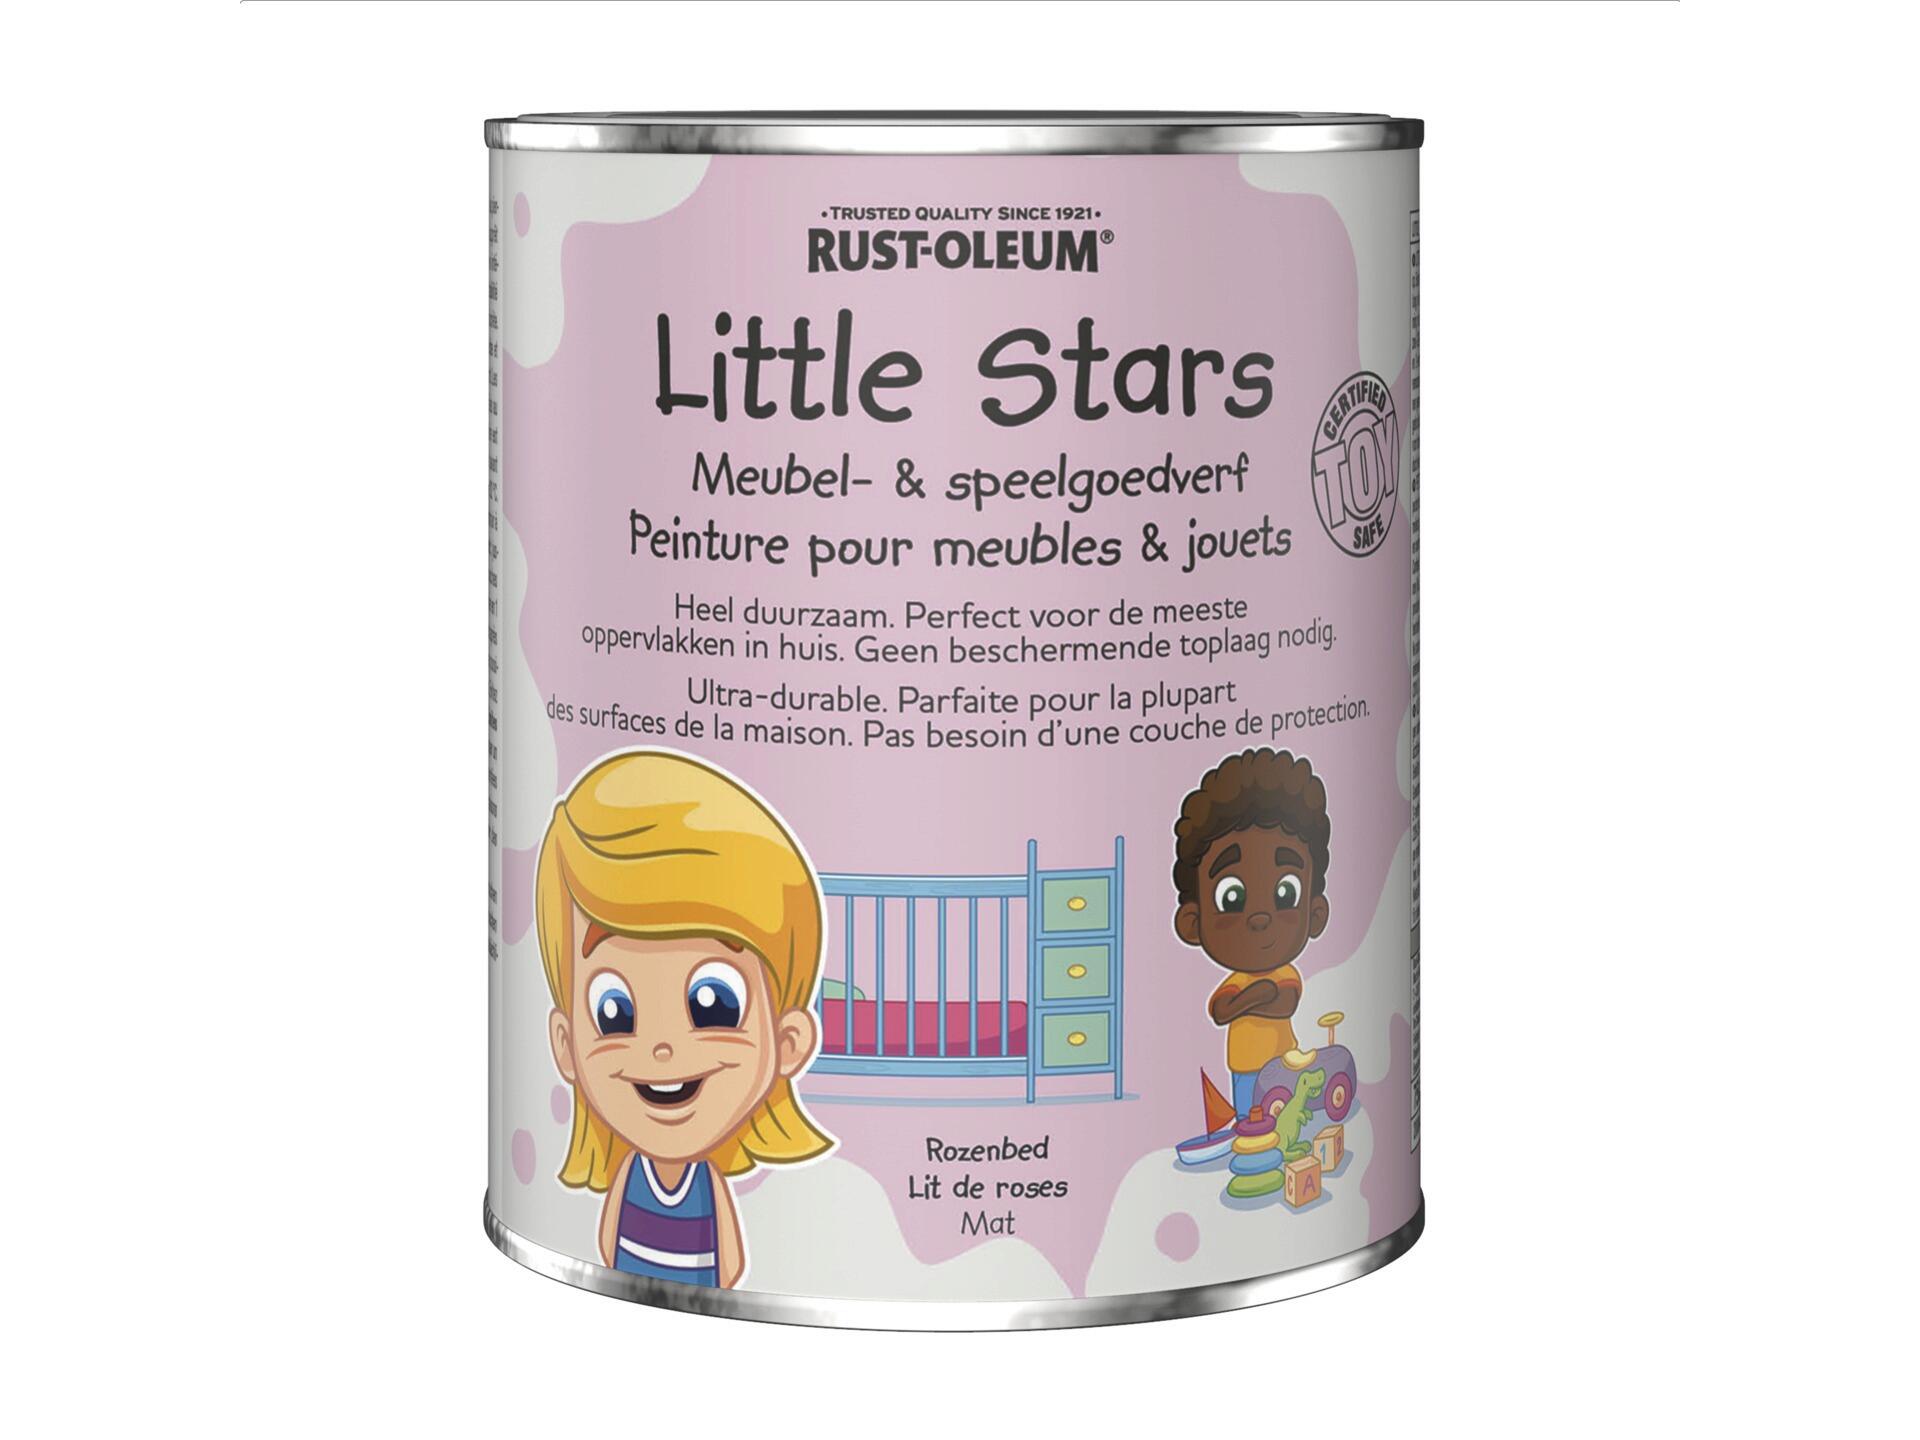 Rust-oleum Little Stars meubel- en speelgoedverf 750ml rozenbed